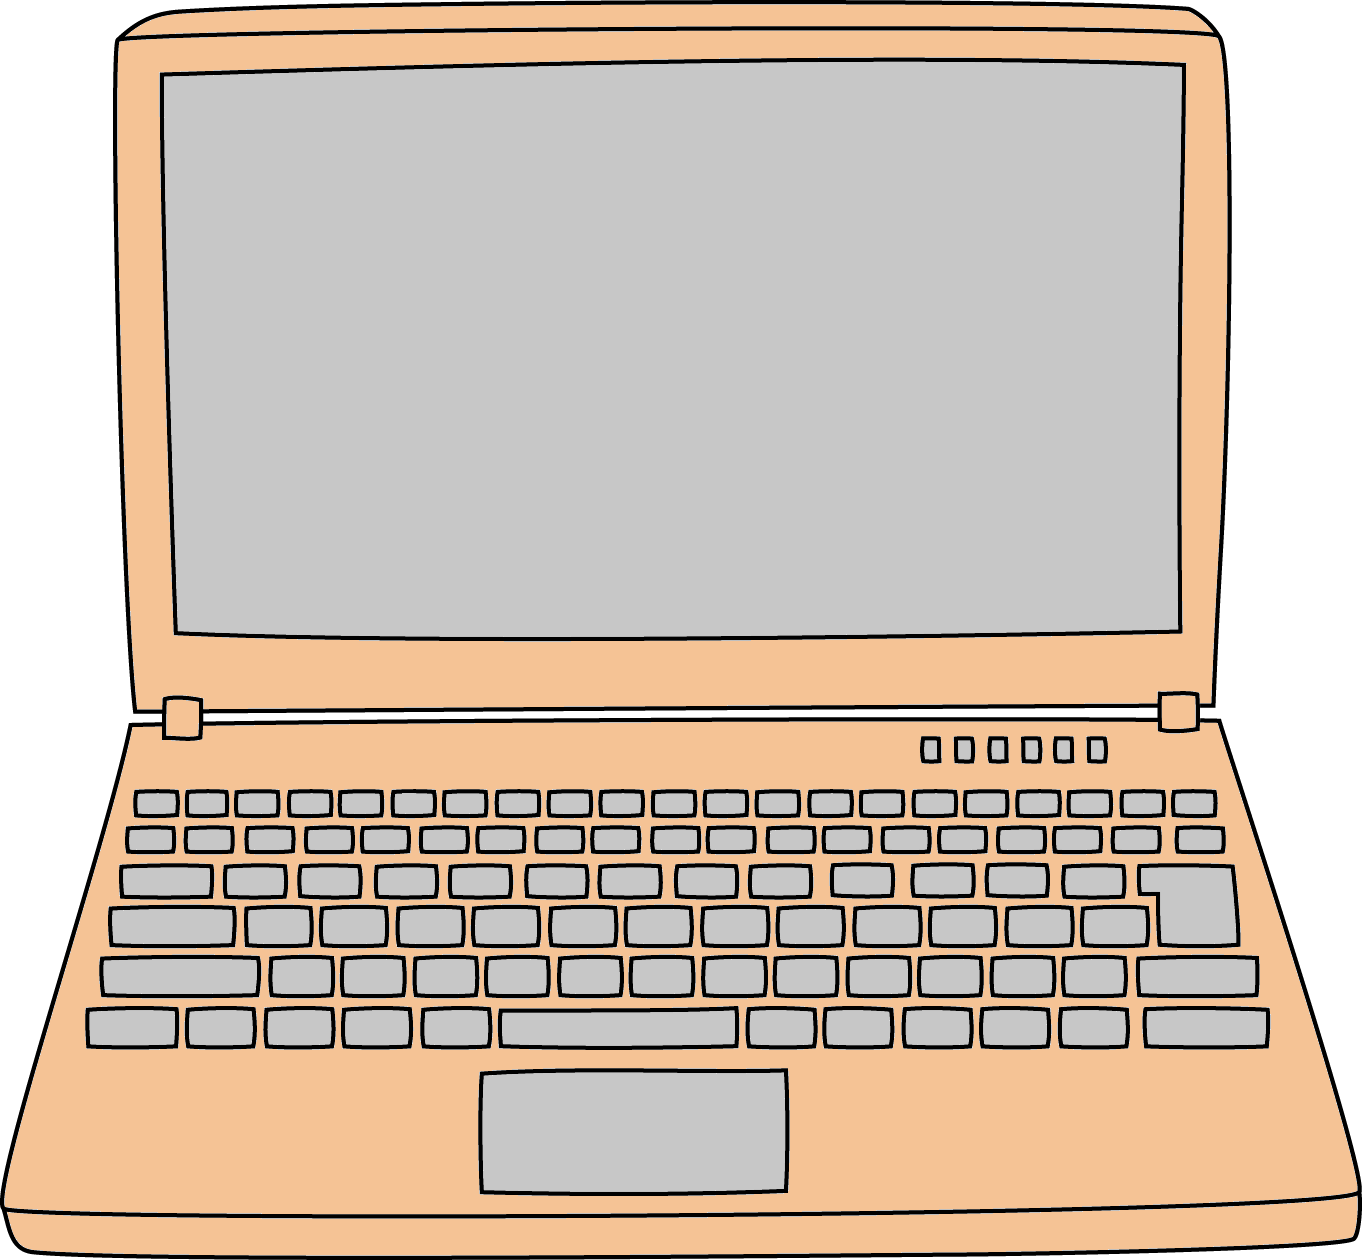  Gambar Kartun Untuk Laptop Top Lucu